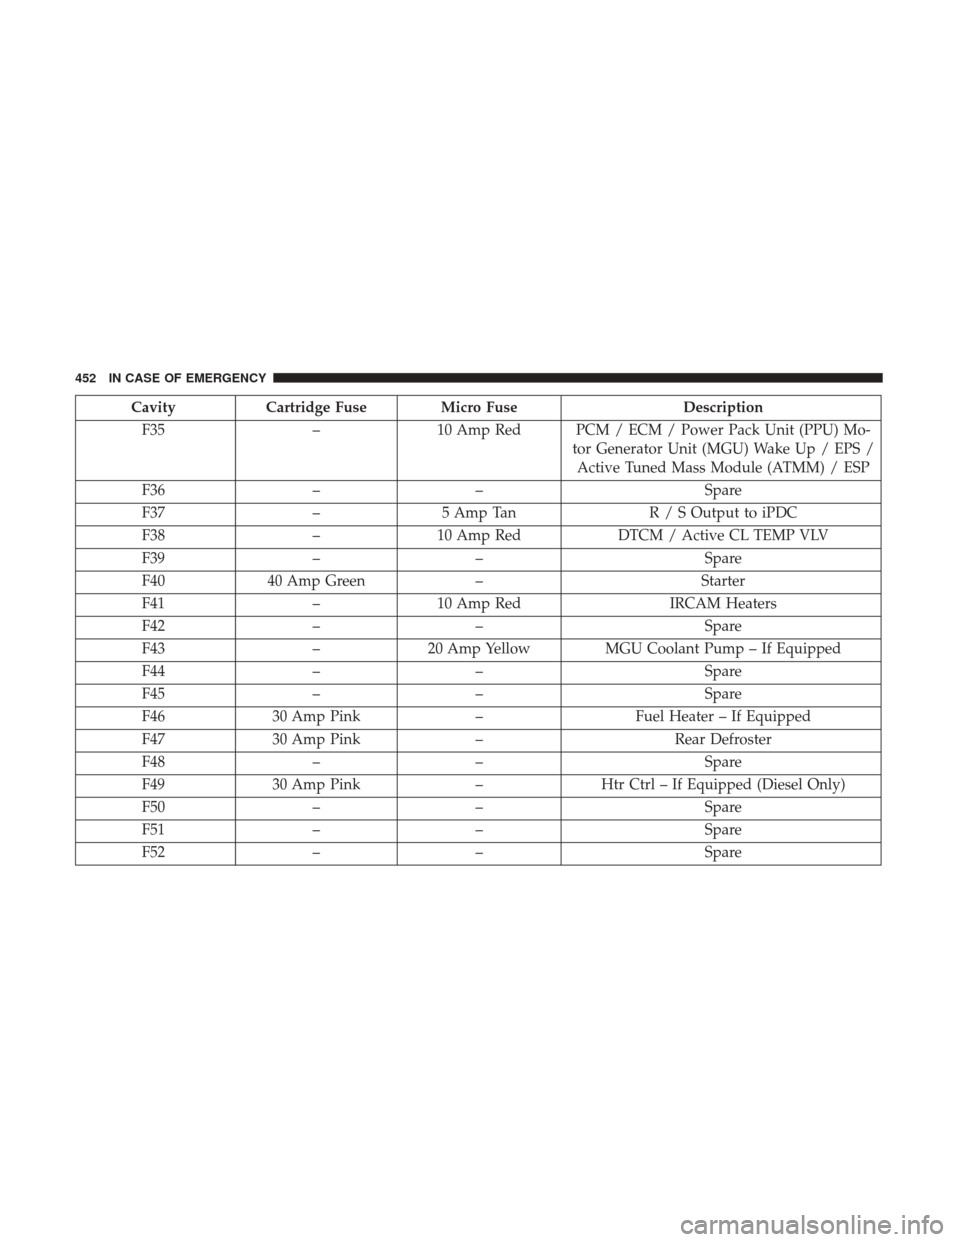 Ram 1500 2019  Owners Manual CavityCartridge Fuse Micro Fuse Description
F35 –10 Amp Red PCM / ECM / Power Pack Unit (PPU) Mo-
tor Generator Unit (MGU) Wake Up / EPS /Active Tuned Mass Module (ATMM) / ESP
F36 –– Spare
F37 �